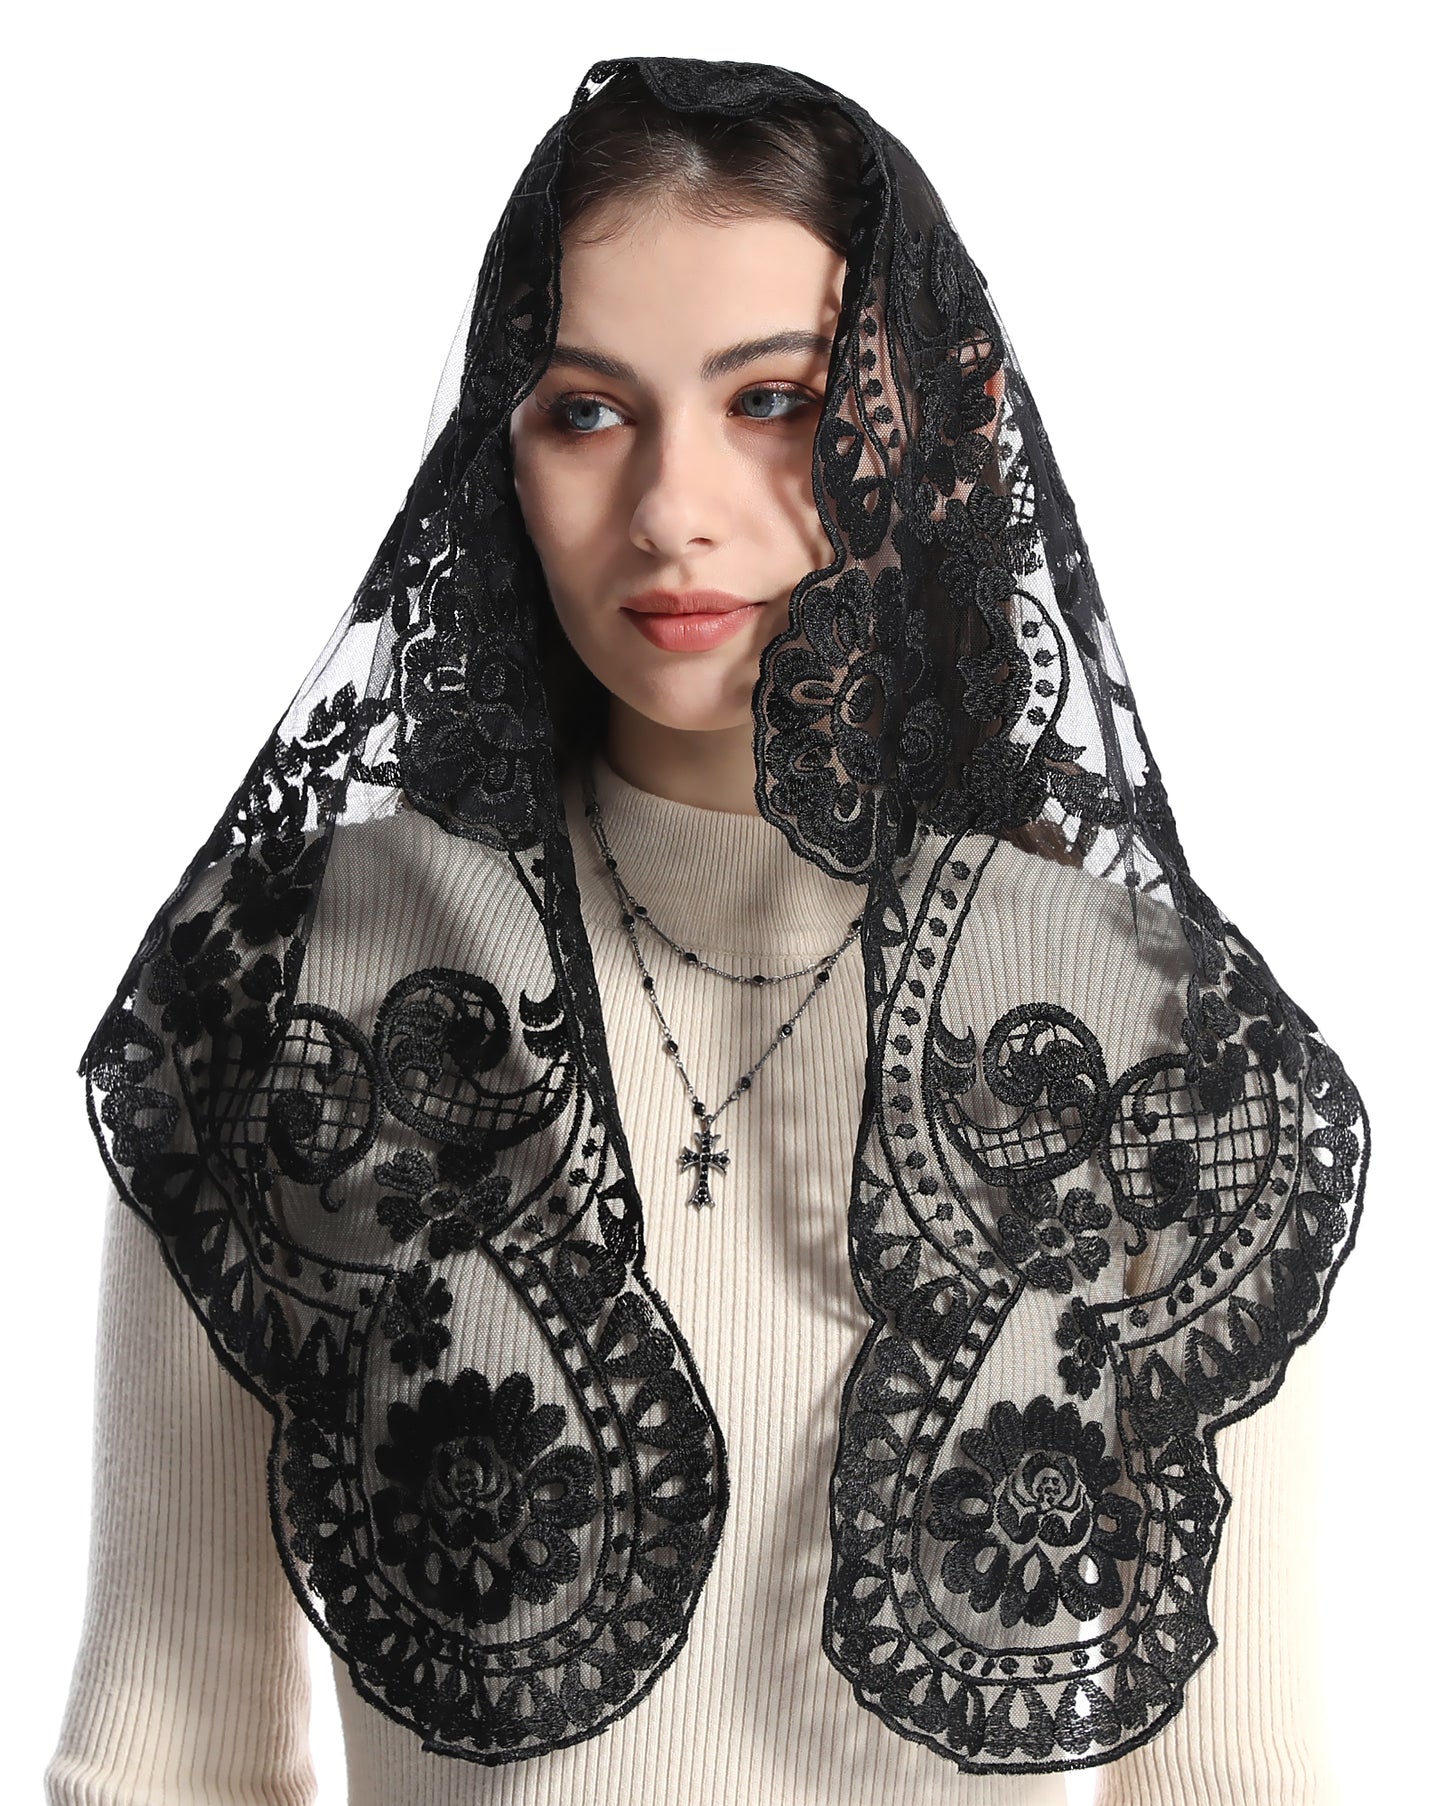 BOZIDOL Triangle Chapel Veil -Spanish Lace Floral Mantilla Veils Wrap Shawl Mass Head Covering